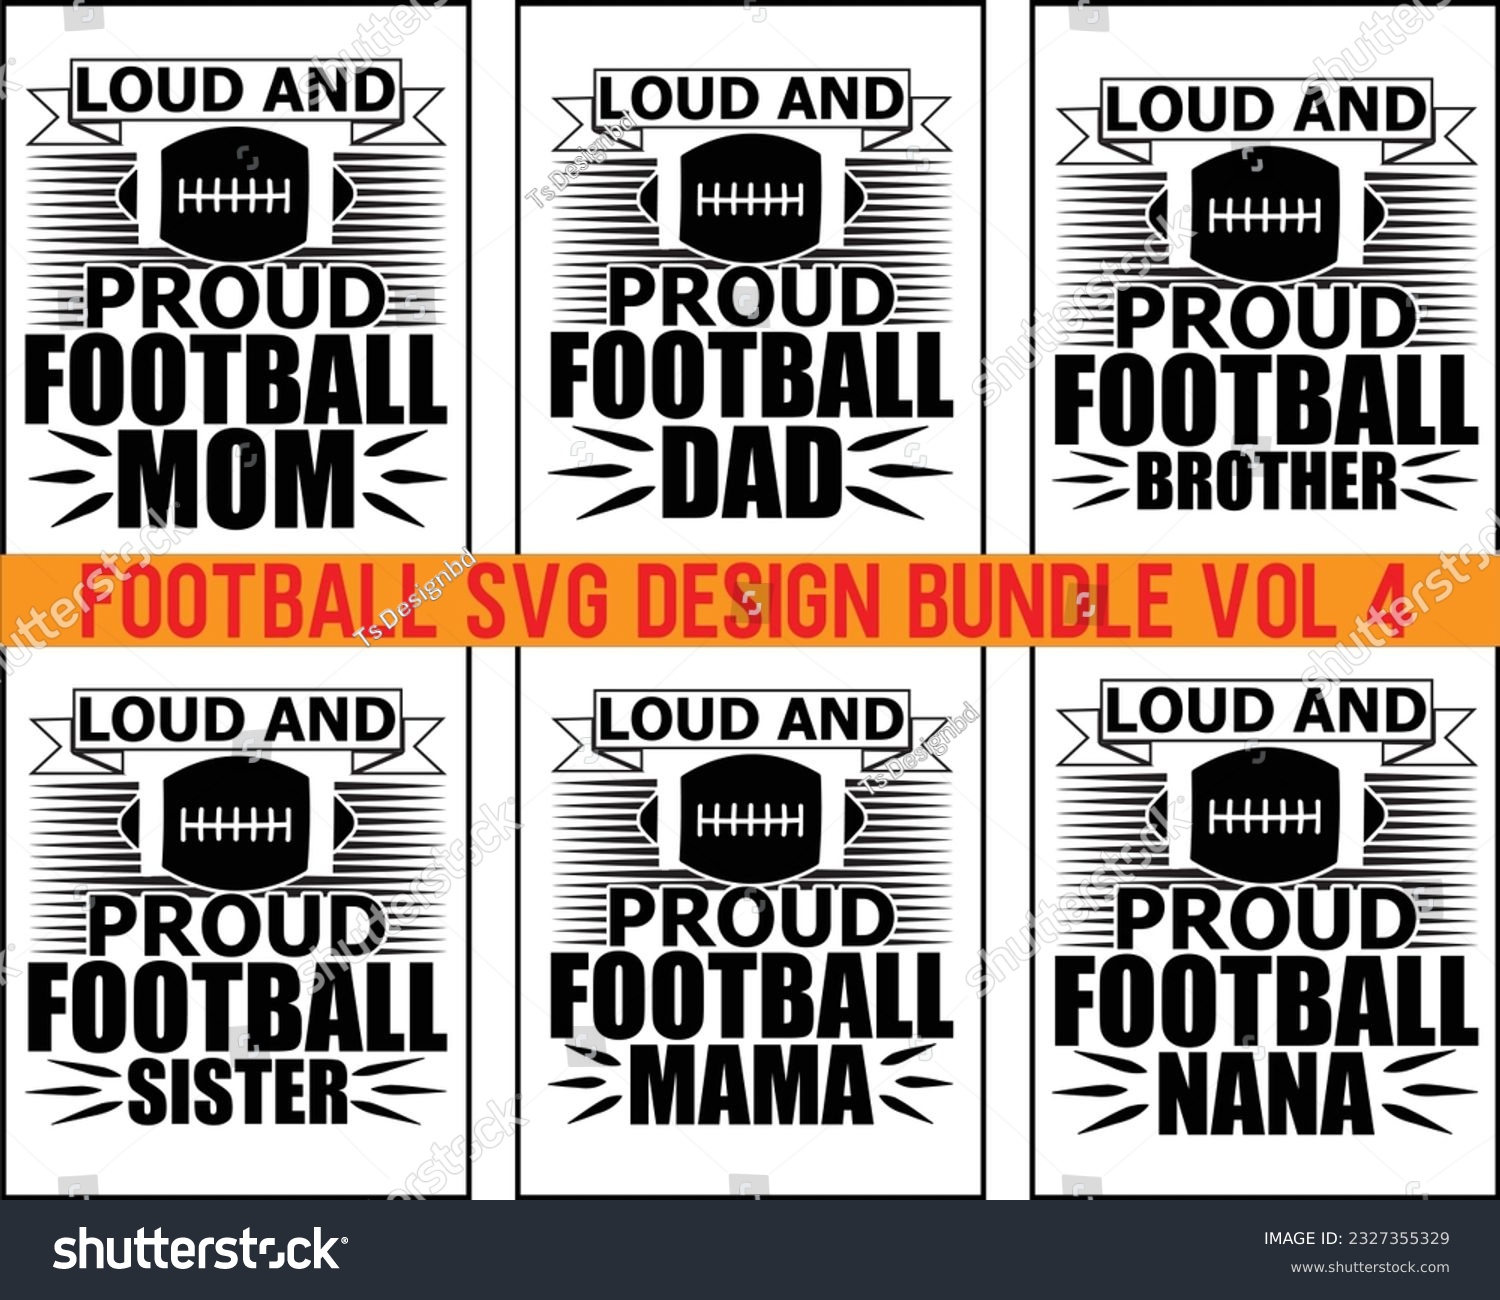 SVG of  Football Svg Design Bundle Vol 4,Football svg Bundle,Football Game Day svg, Funny Footbal Sayings,Cut Files,Eps File,Football Mom Dad Sister SVG,Svg Bundle, Funny football bundle svg